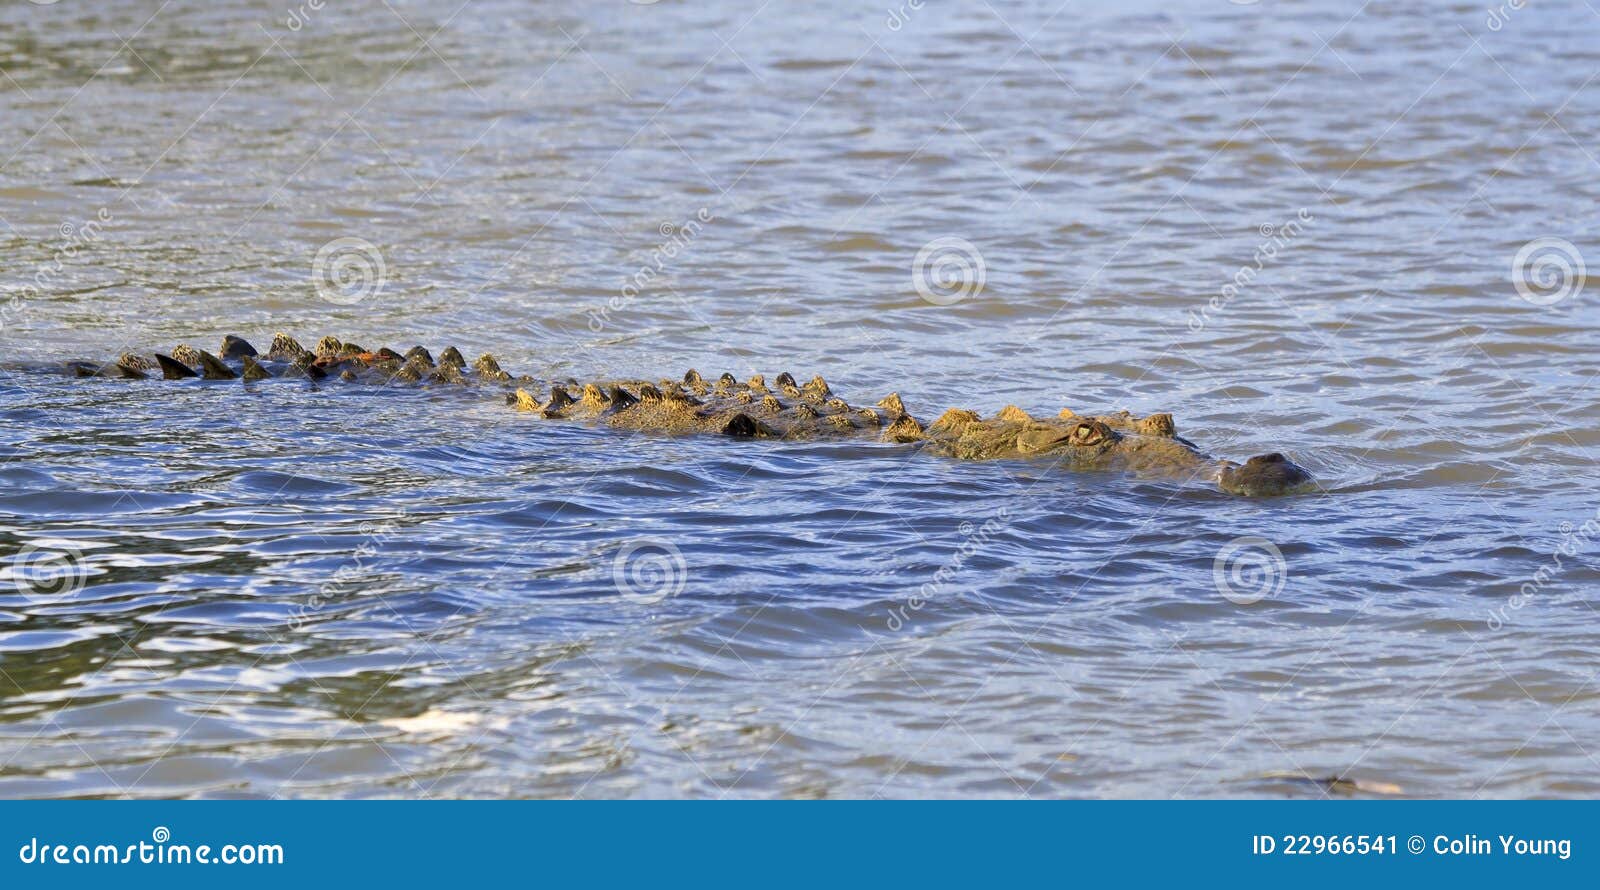 american crocodile swimming